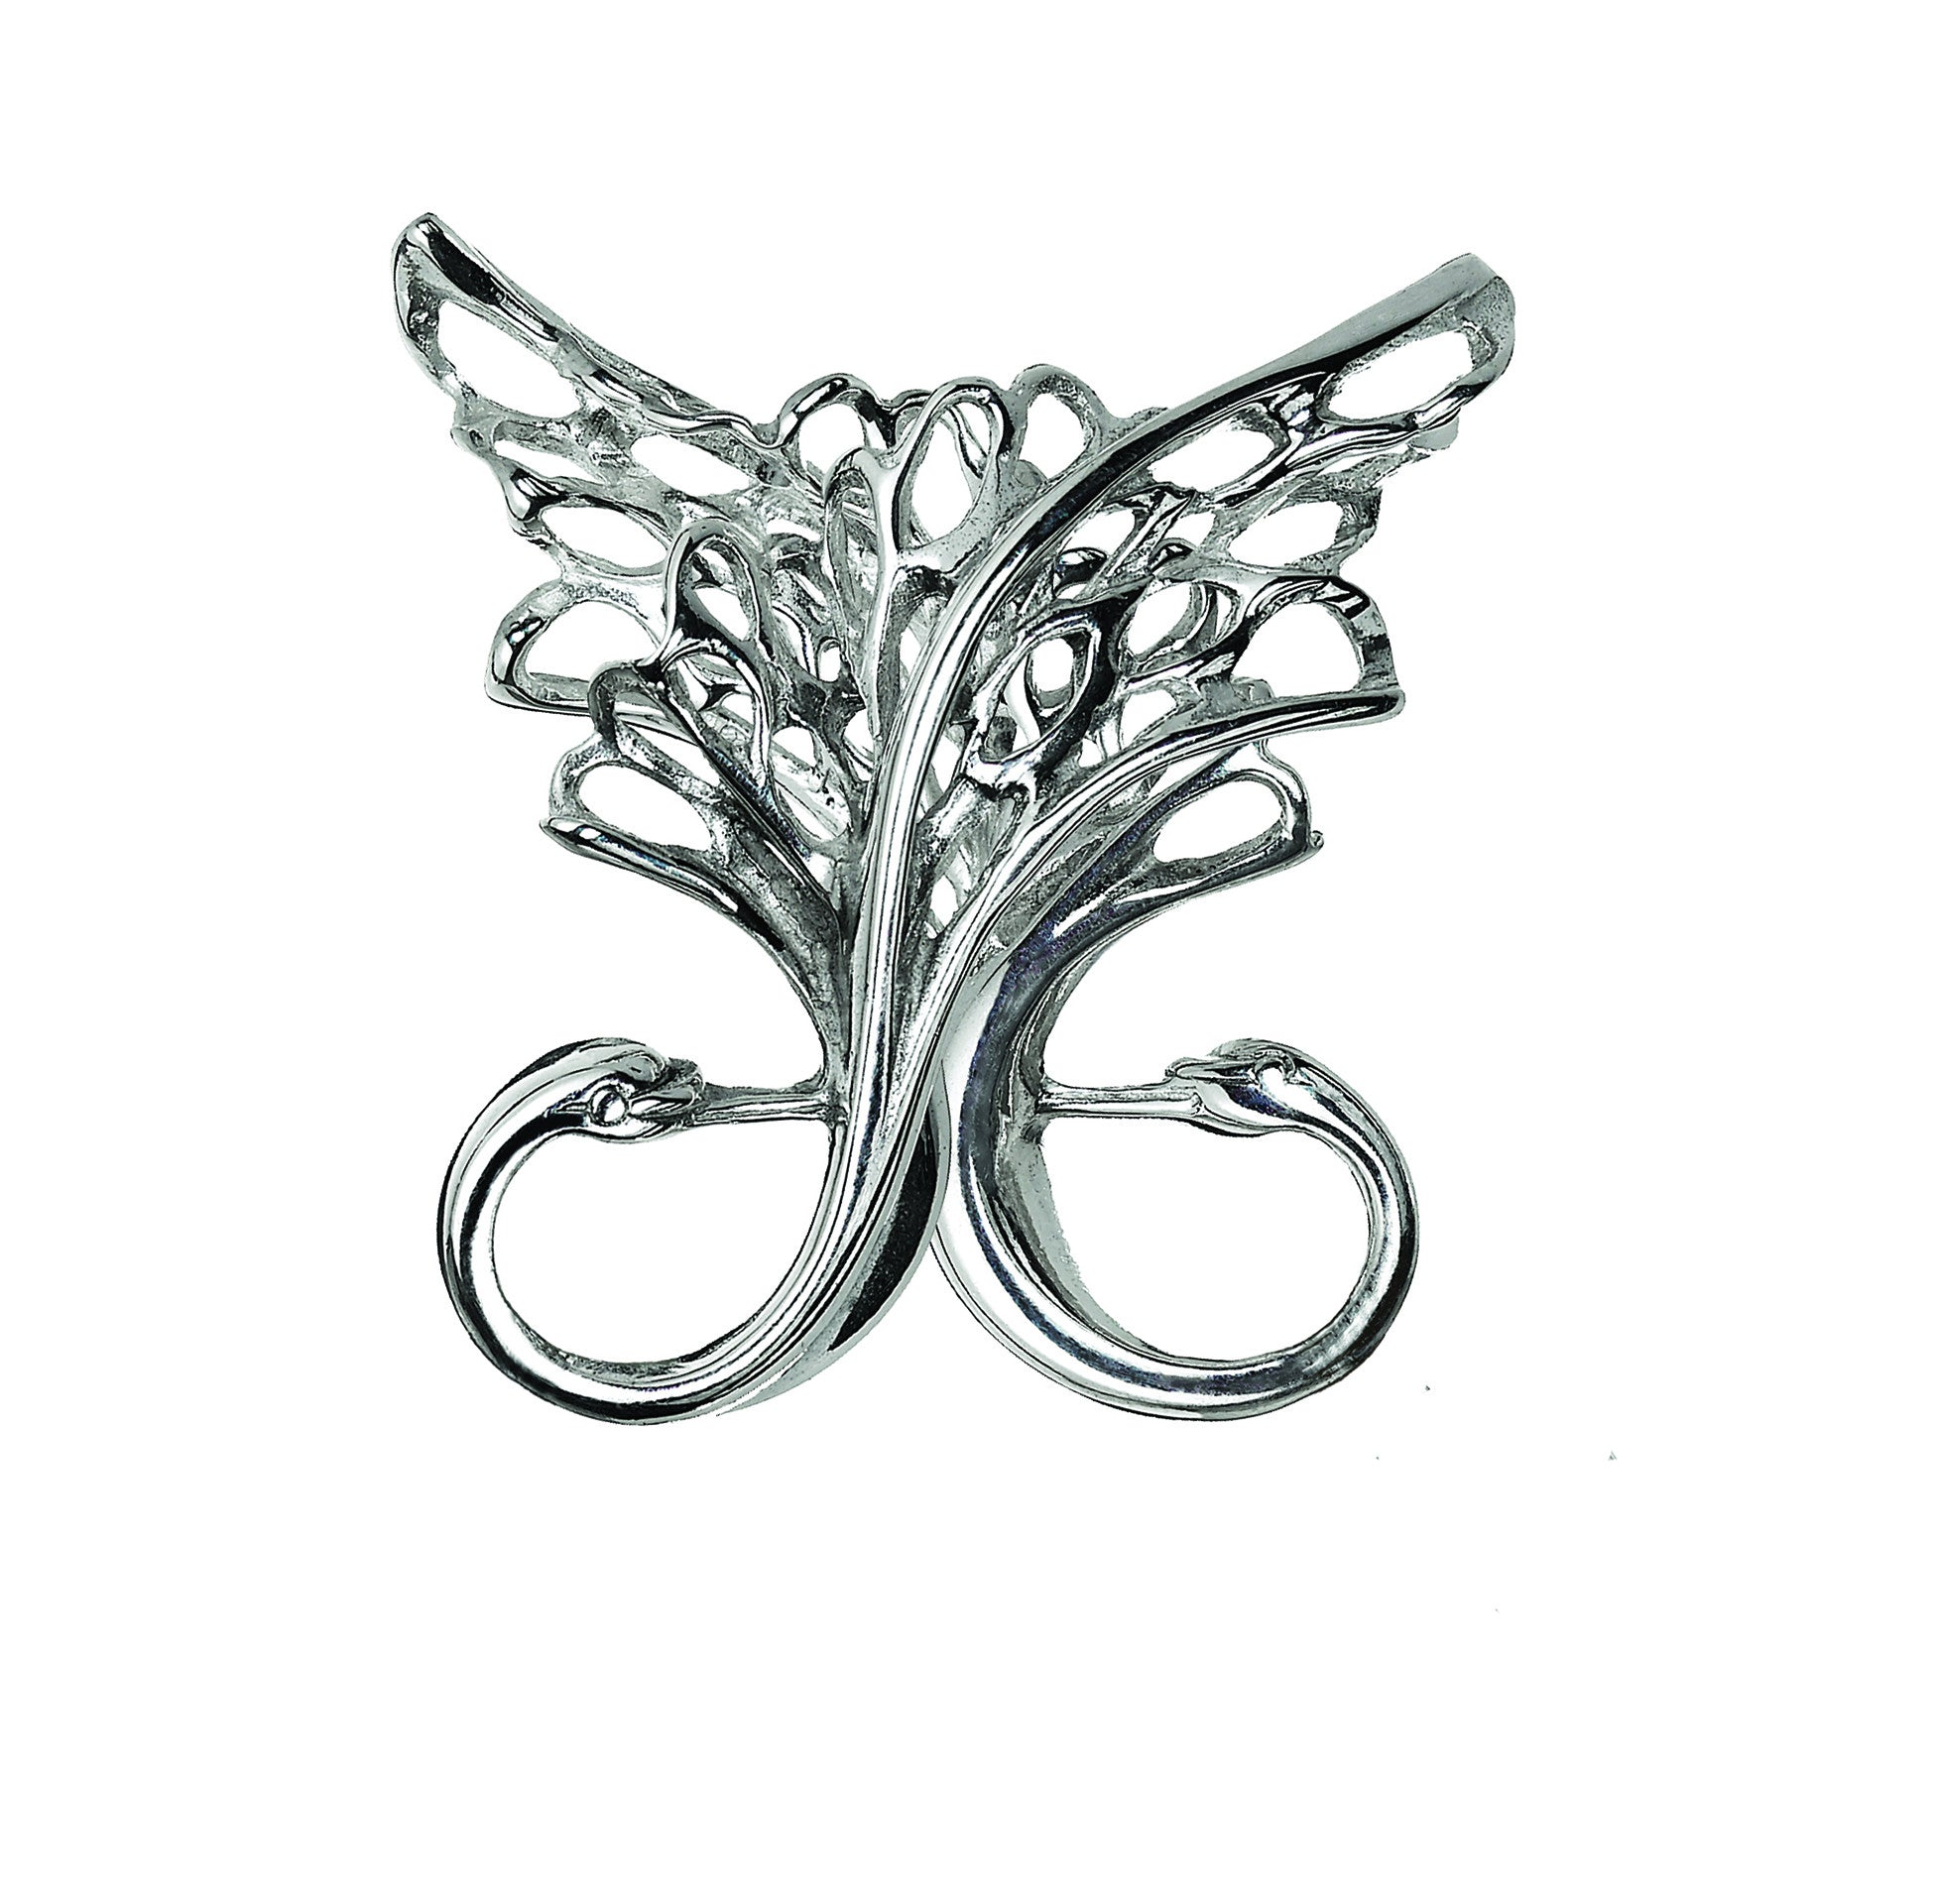 Sterling Silver Twin Brooch. Handmade Irish Designed Jewelry, inspired by the Irish legend The Children of Lir.